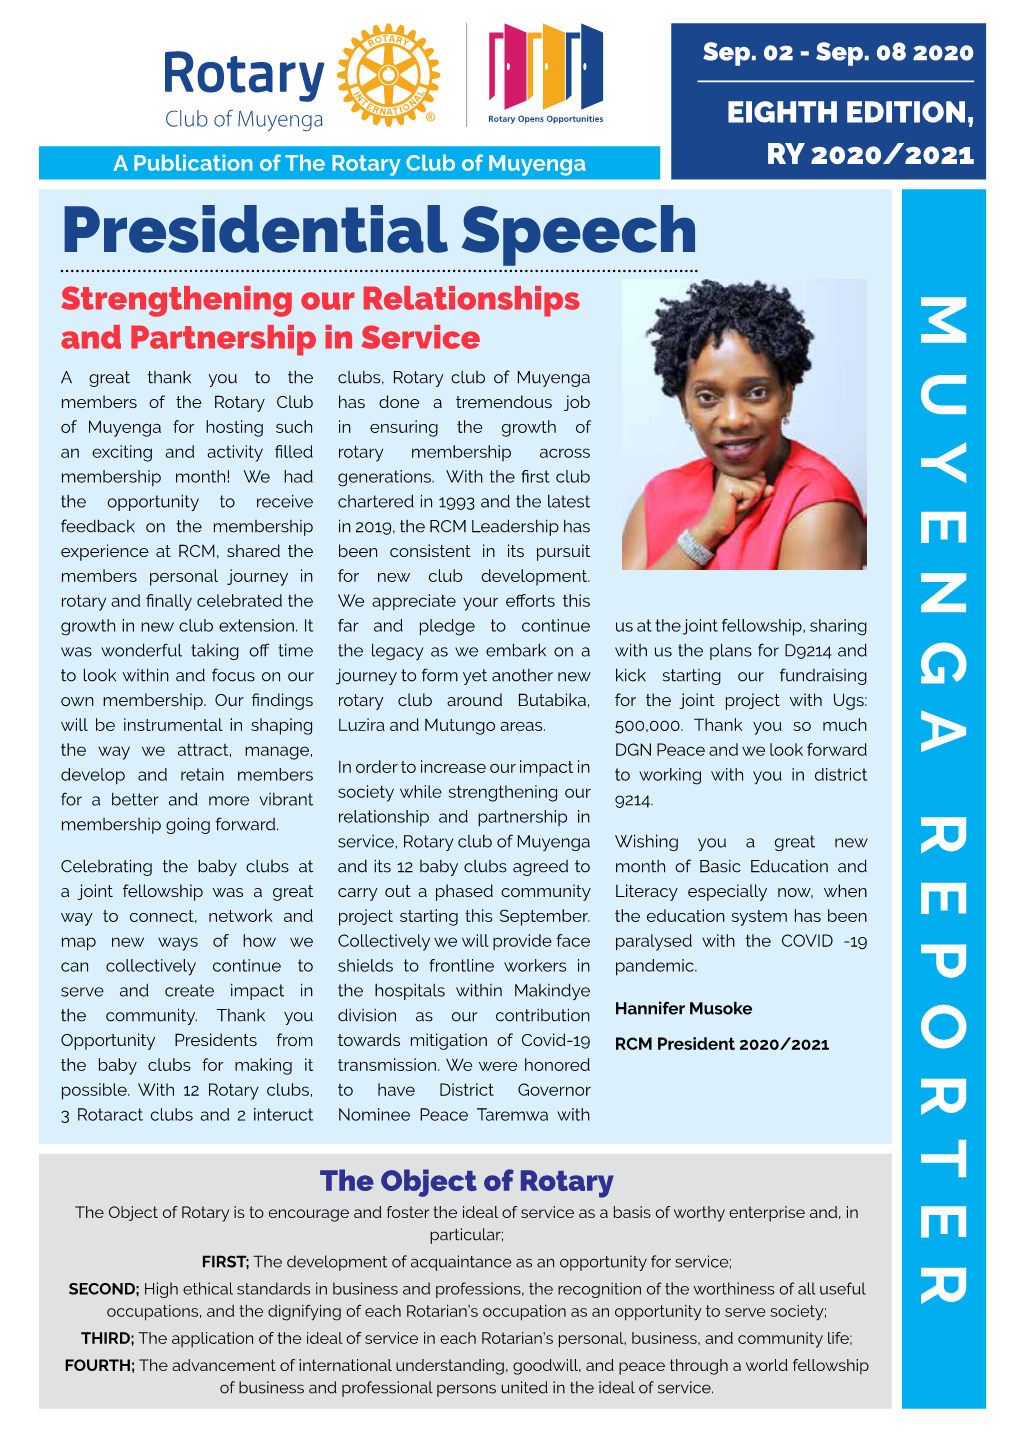 Presidential Speech